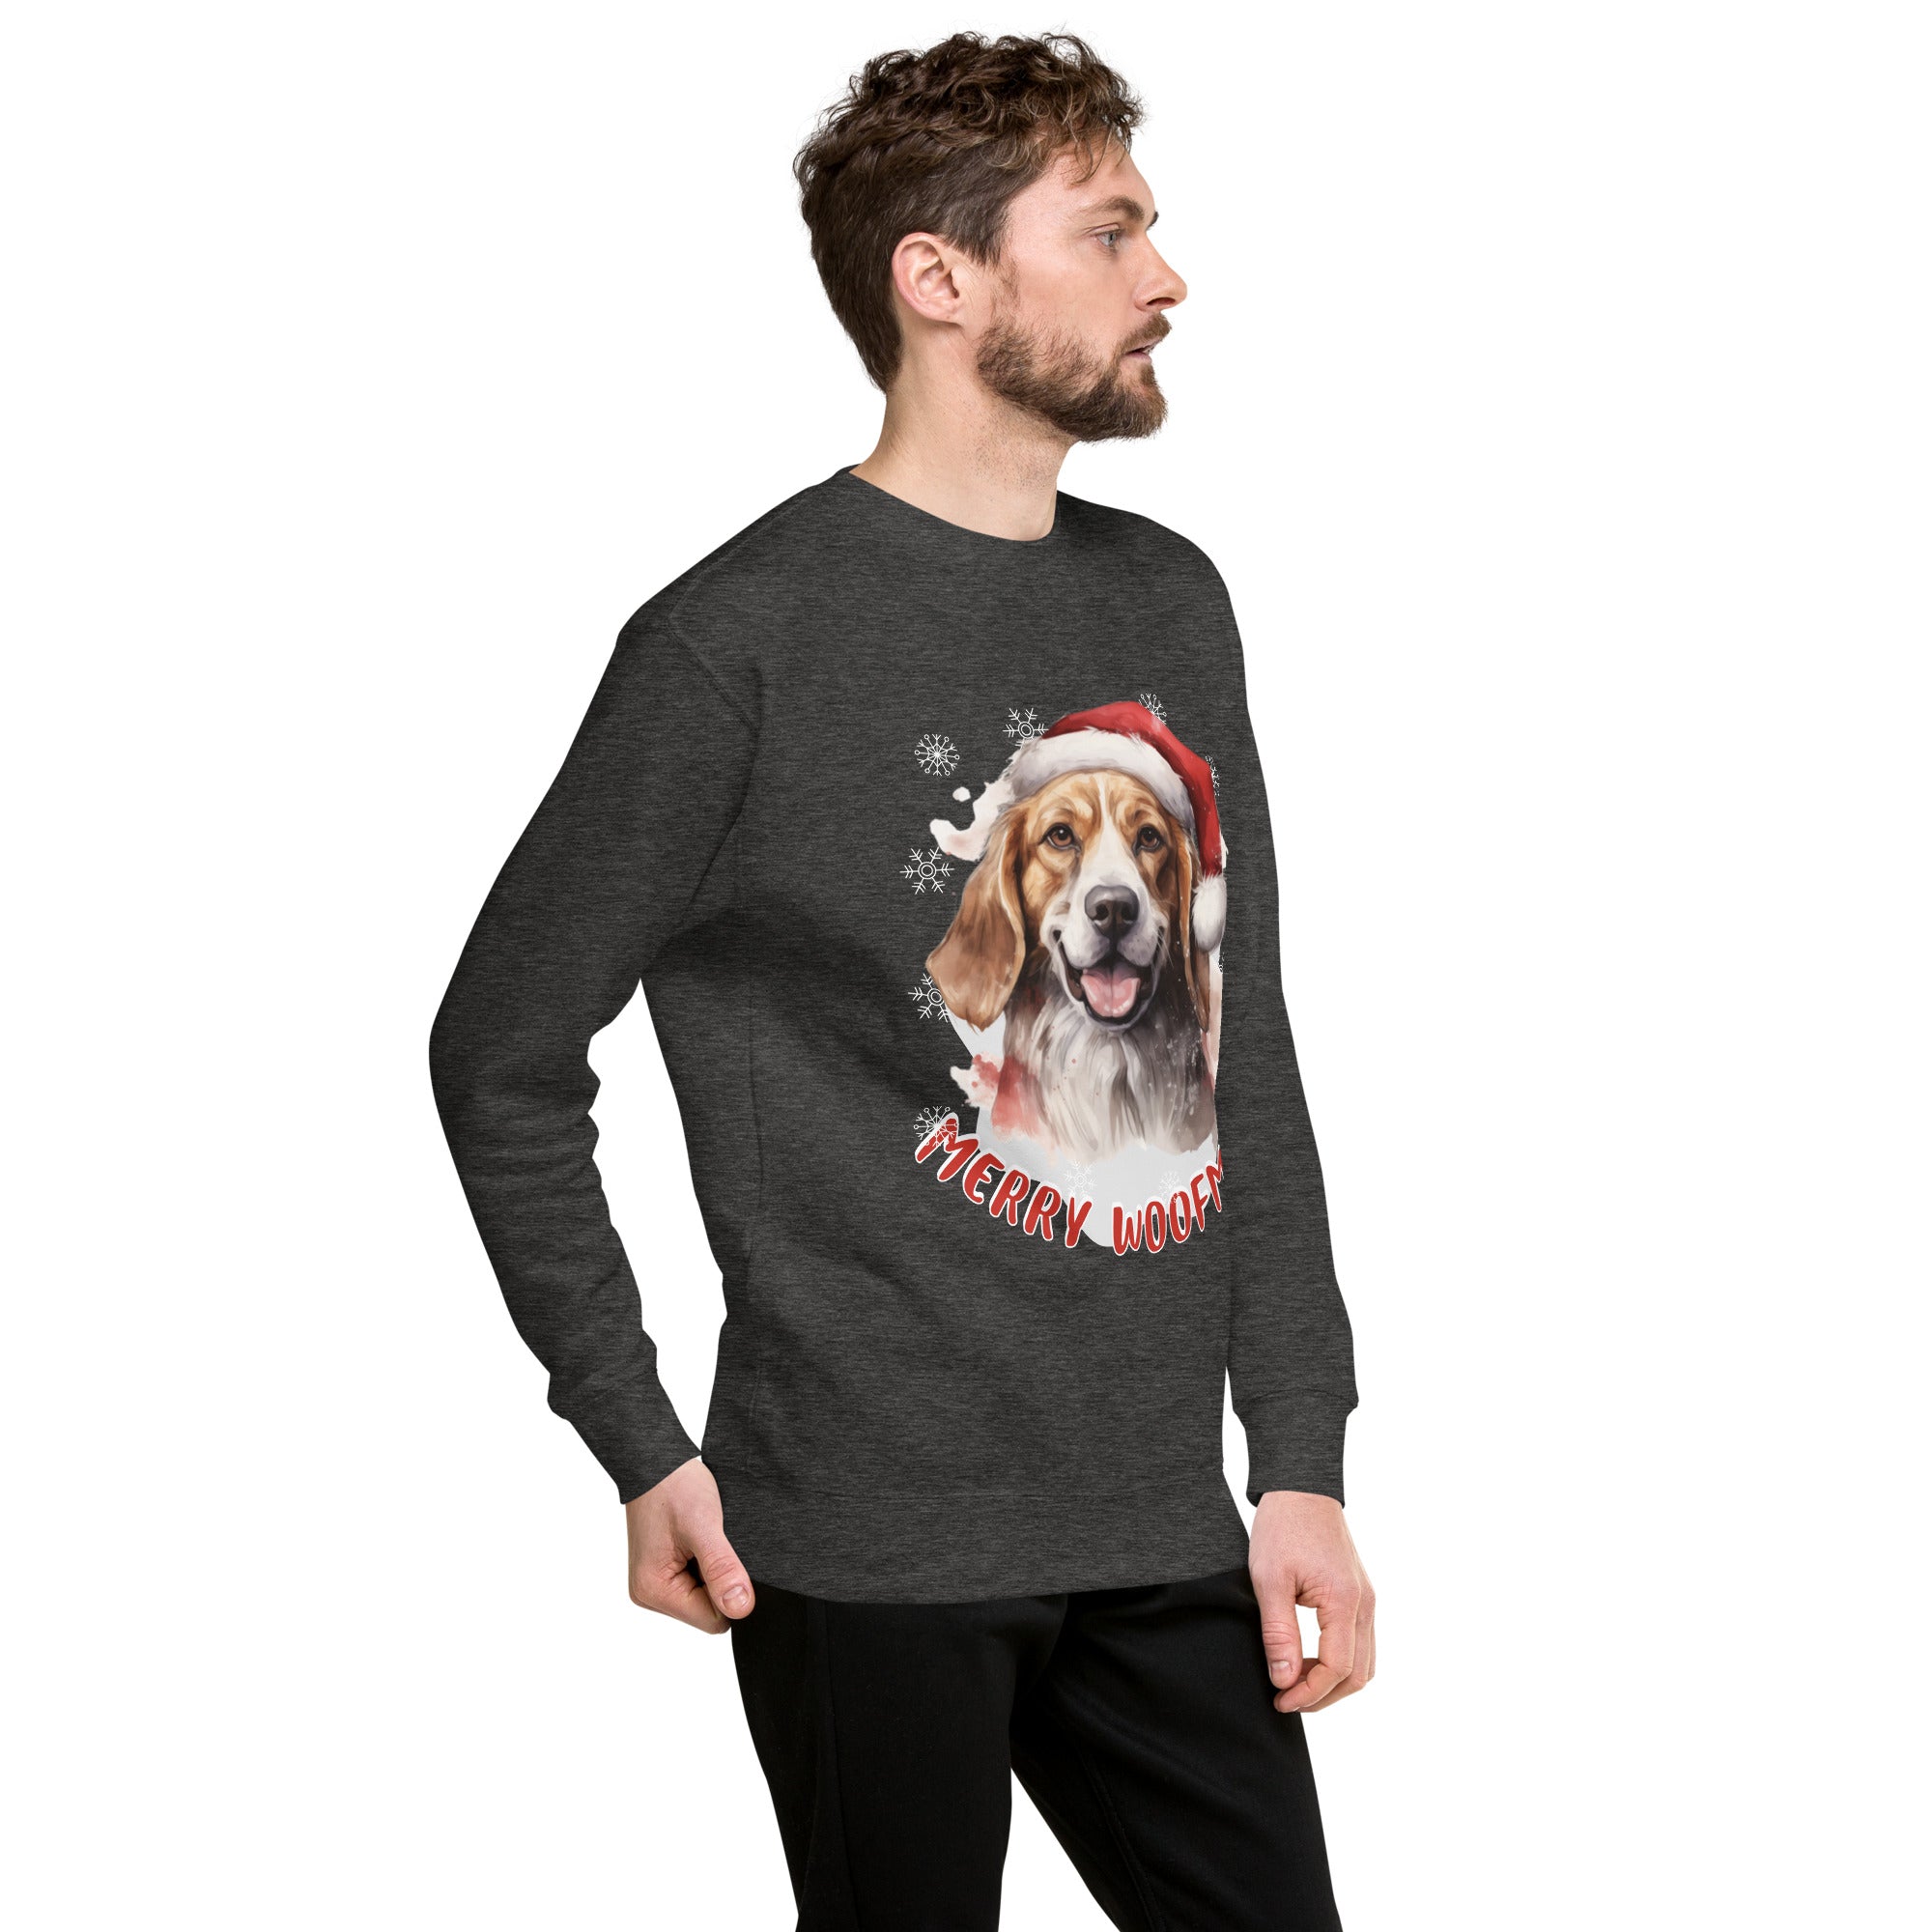 Unisex Premium Sweatshirt Beagle - Merry Woofmas